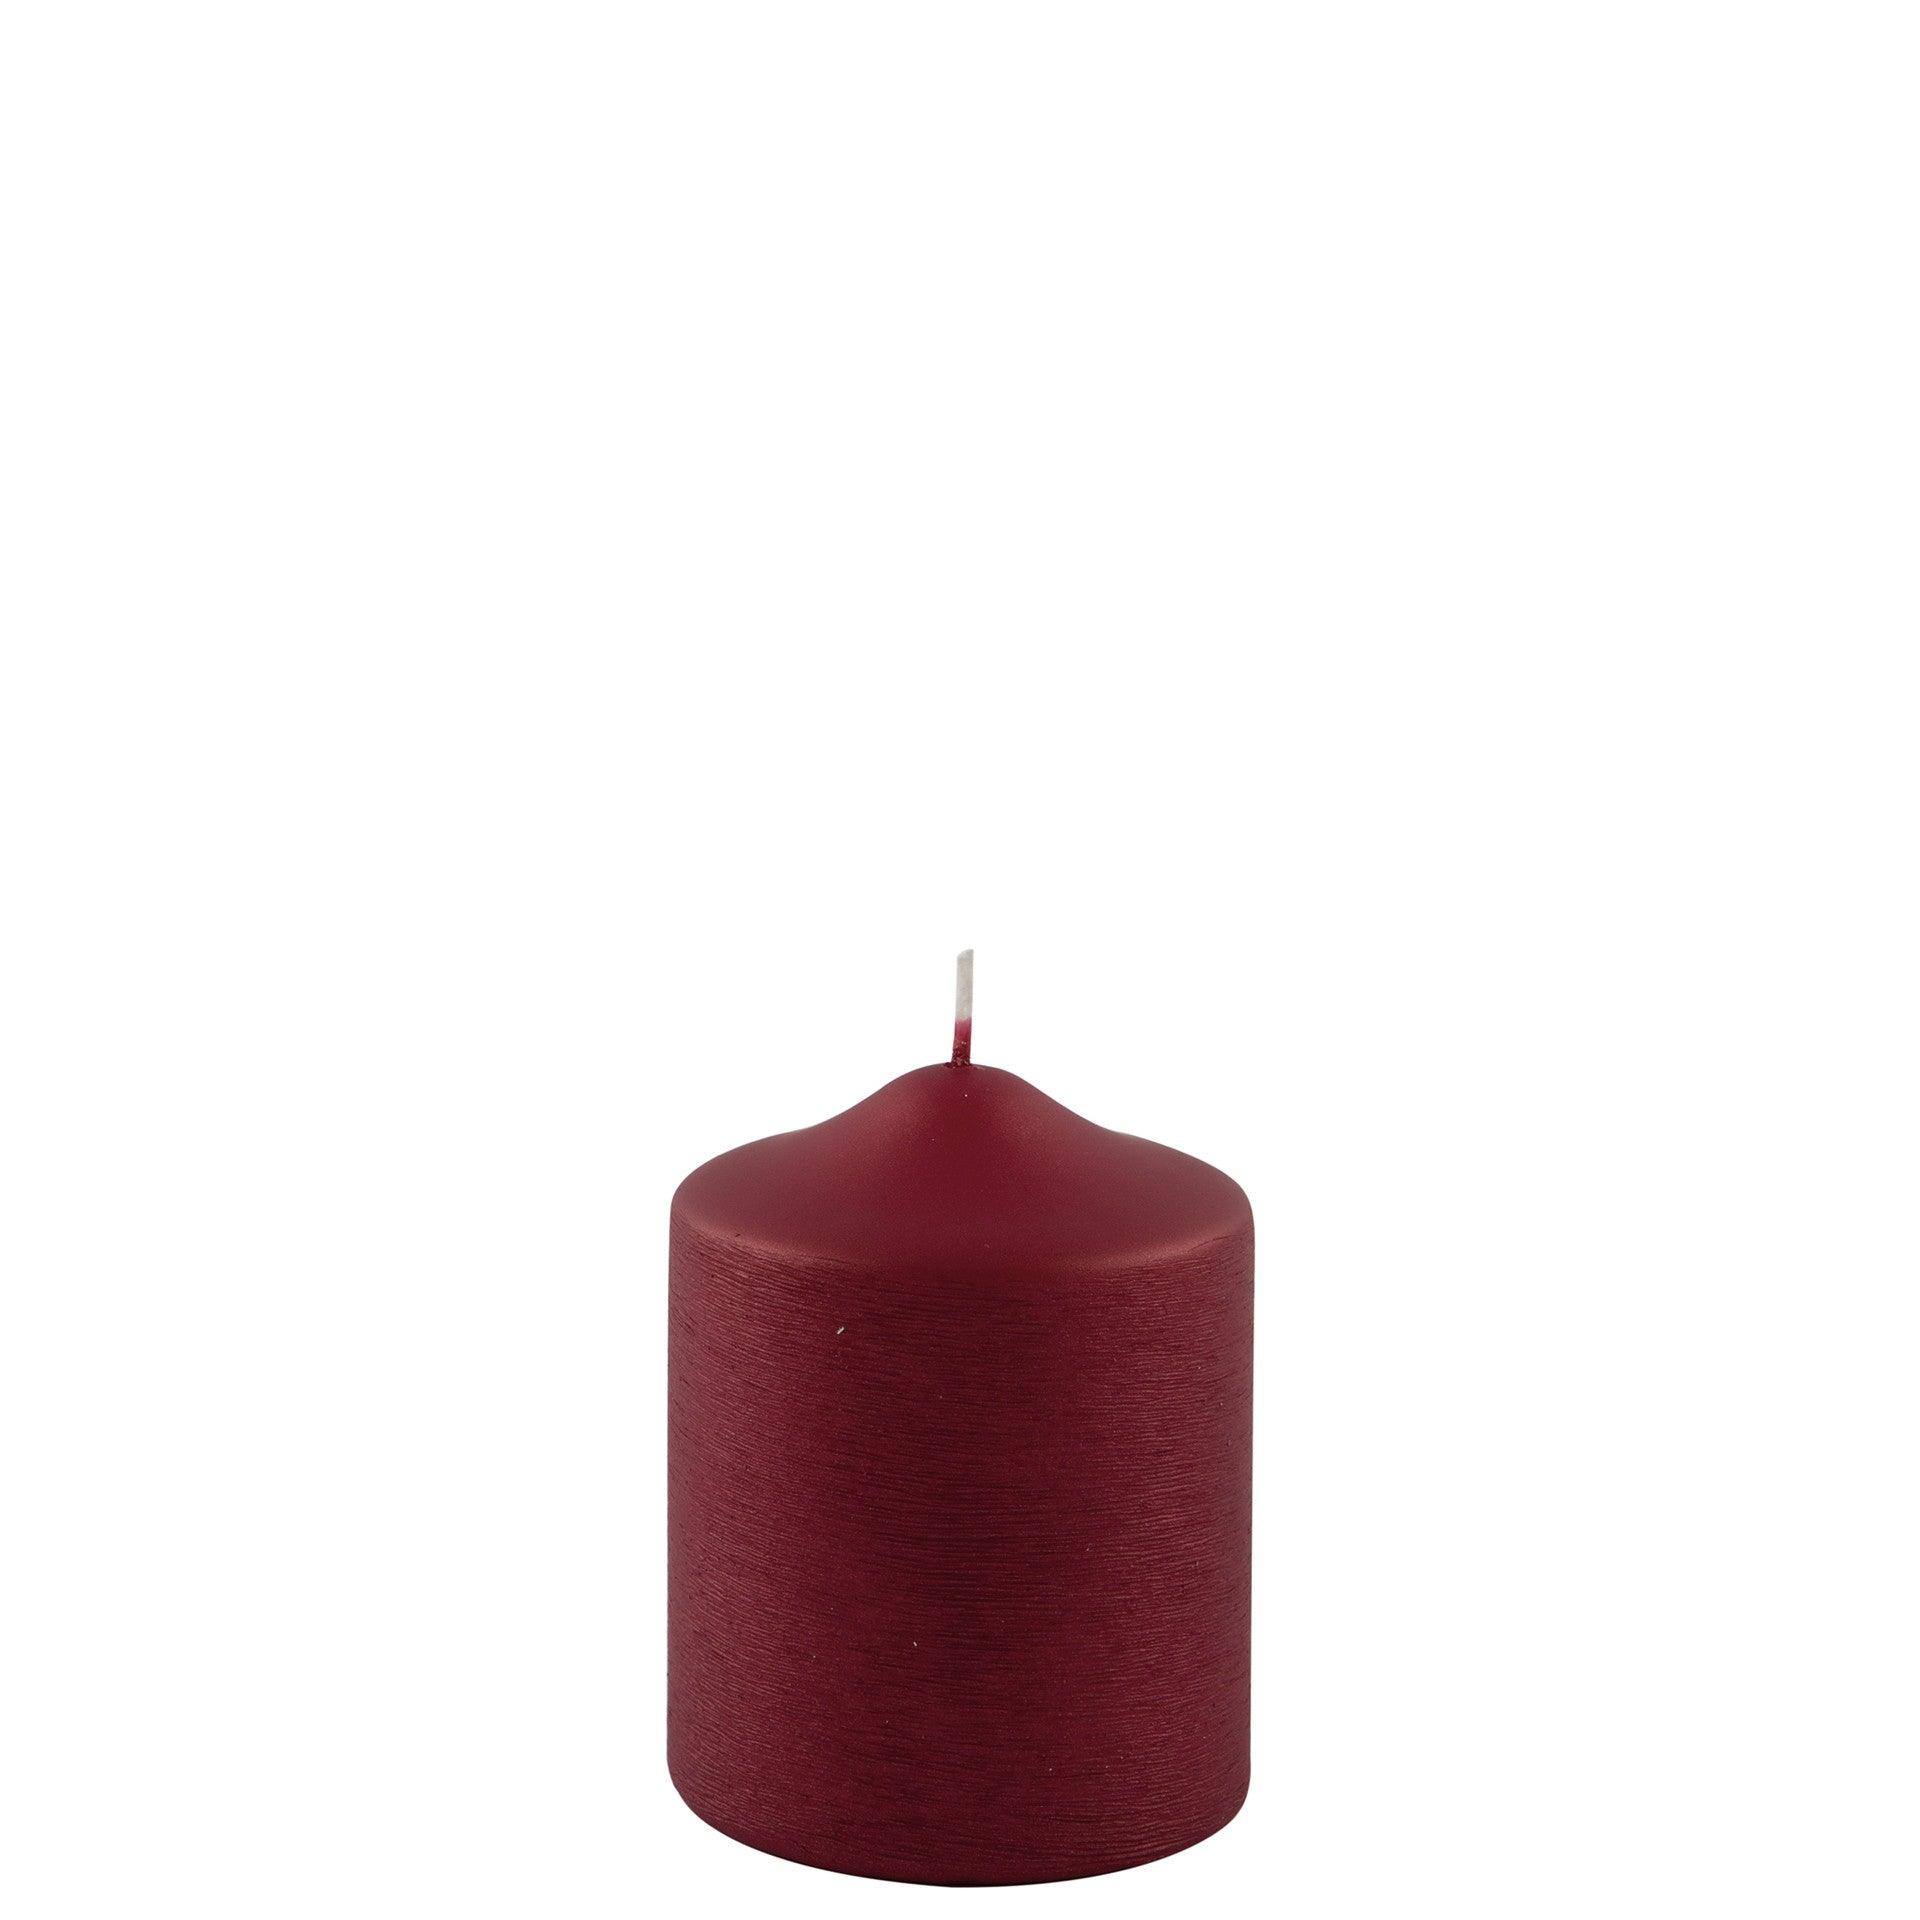 Fink Candle Stumpenkerze metallic gebürstet Rot 10cm - HomeDesign Knaus wir schaffen Inspirationen 